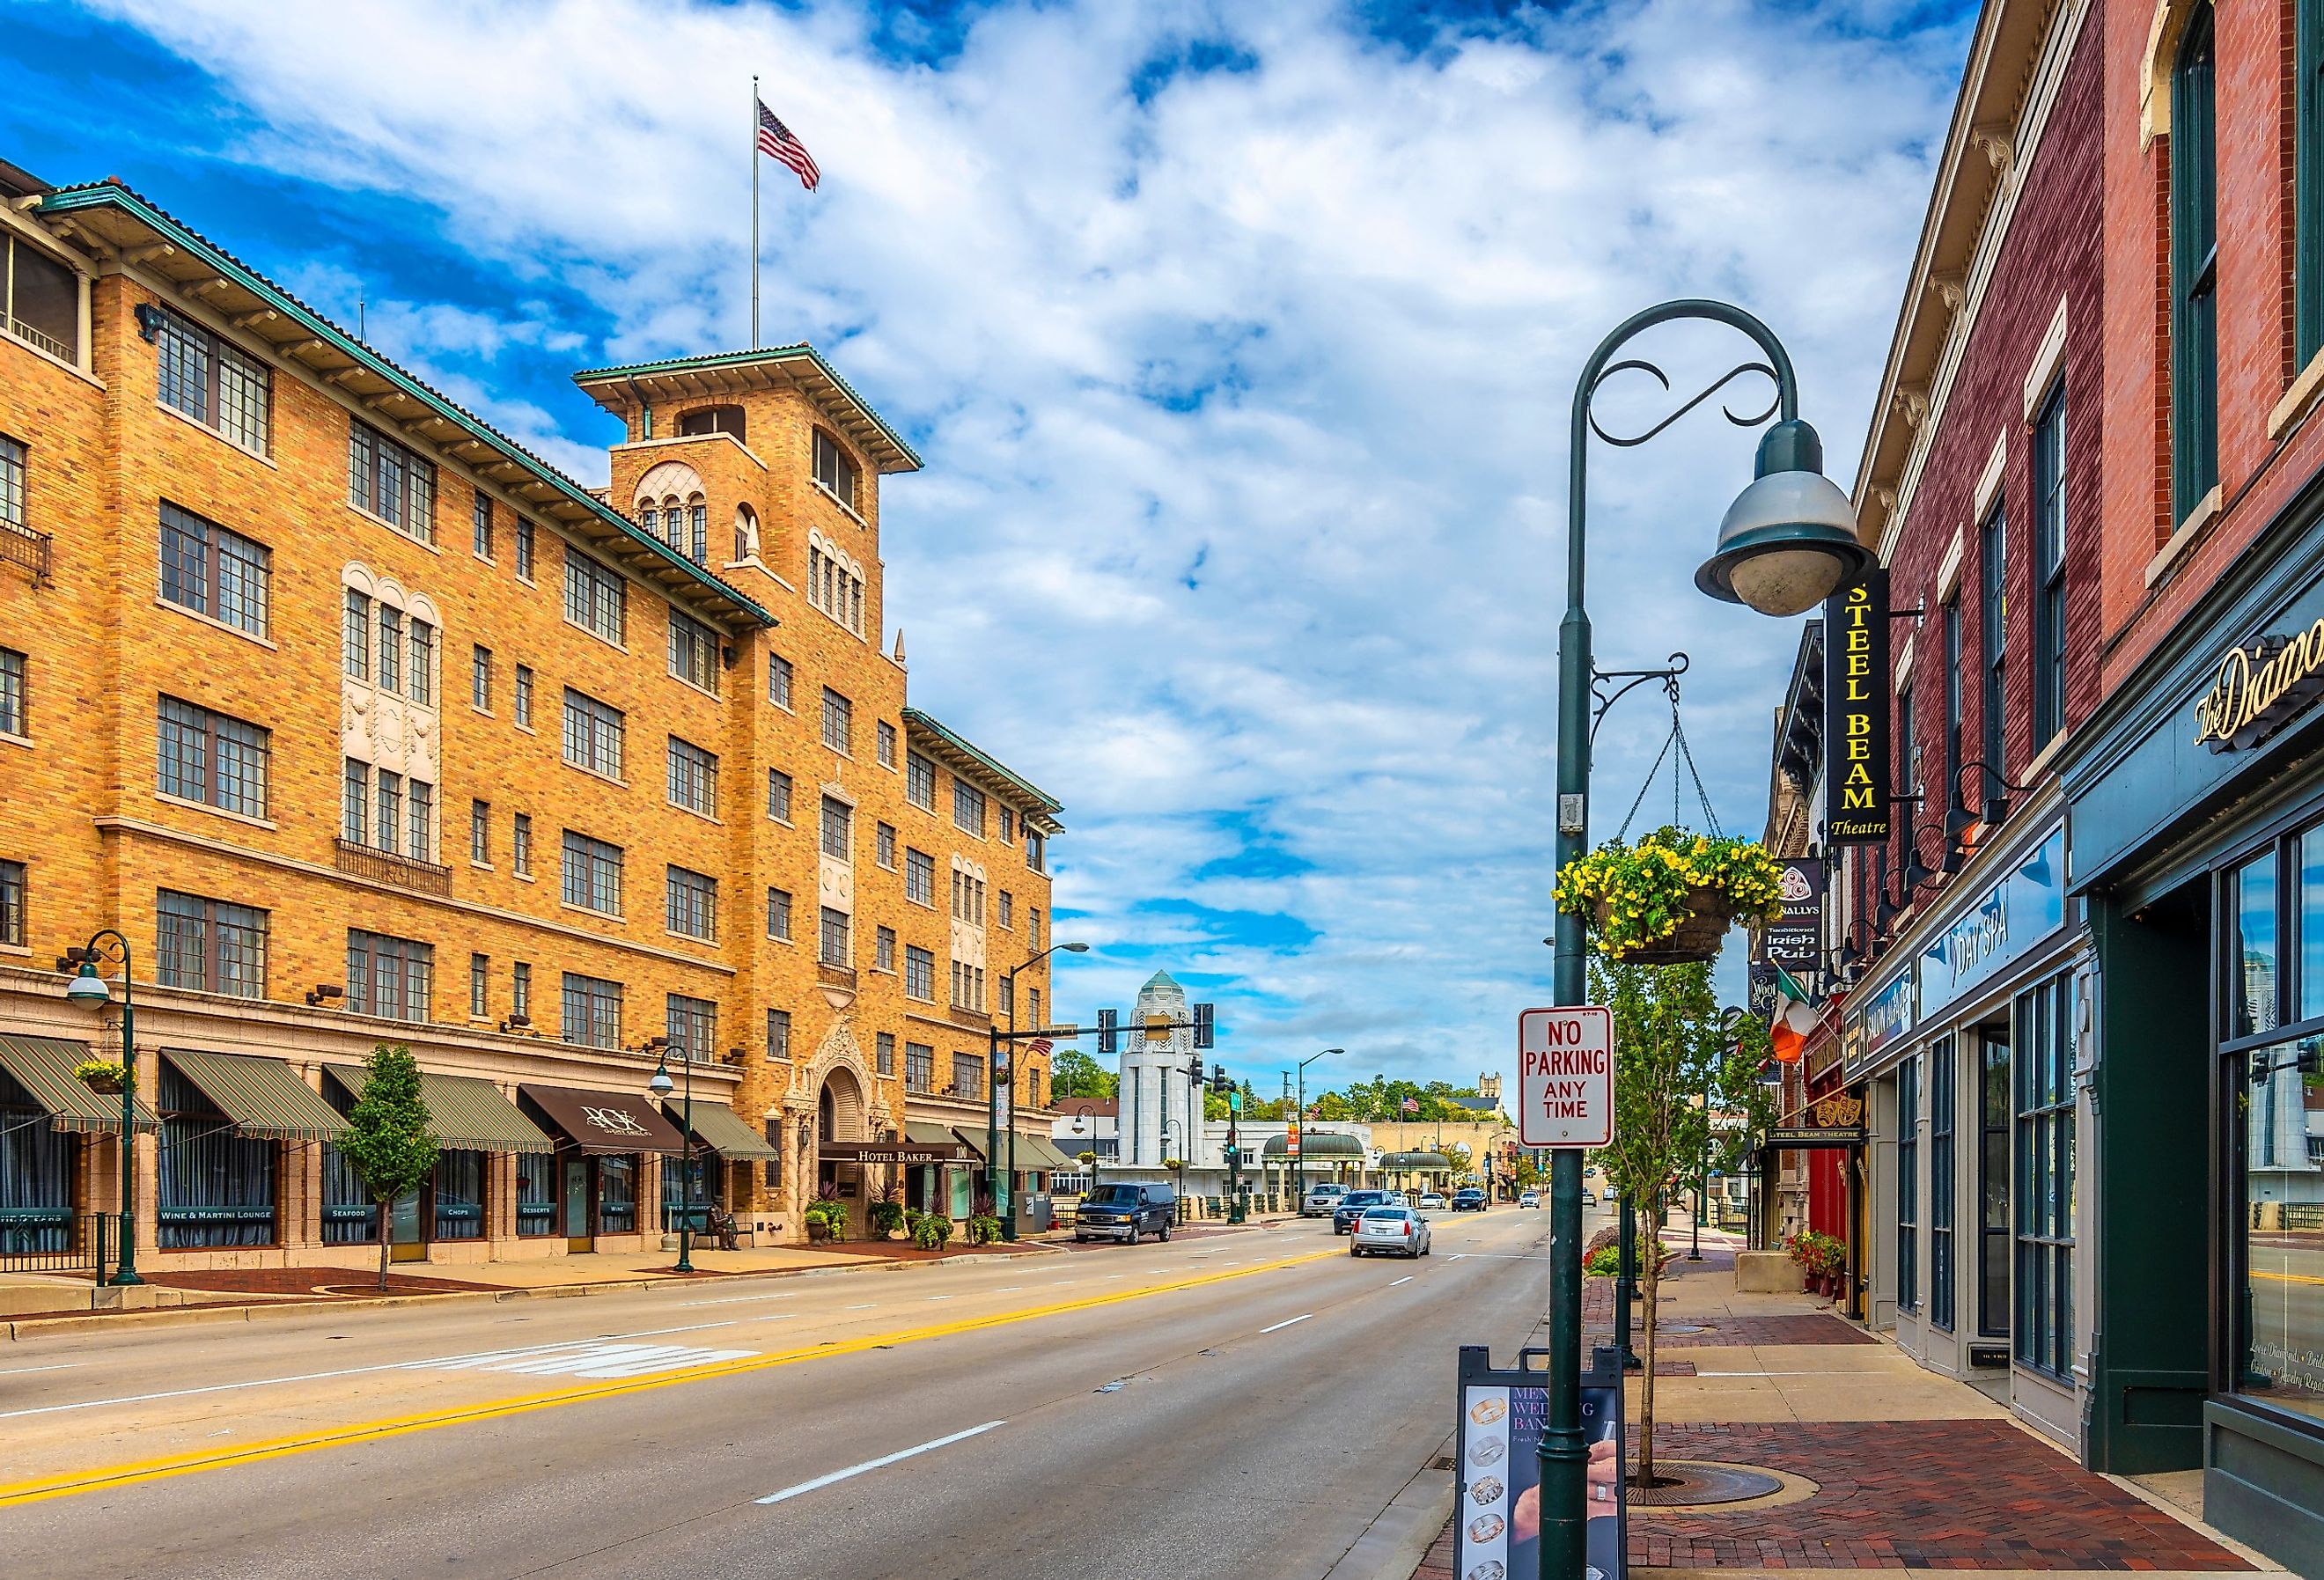 Downtown street view in St. Charles, Illinois. Image credit Nejdet Duzen via Shutterstock